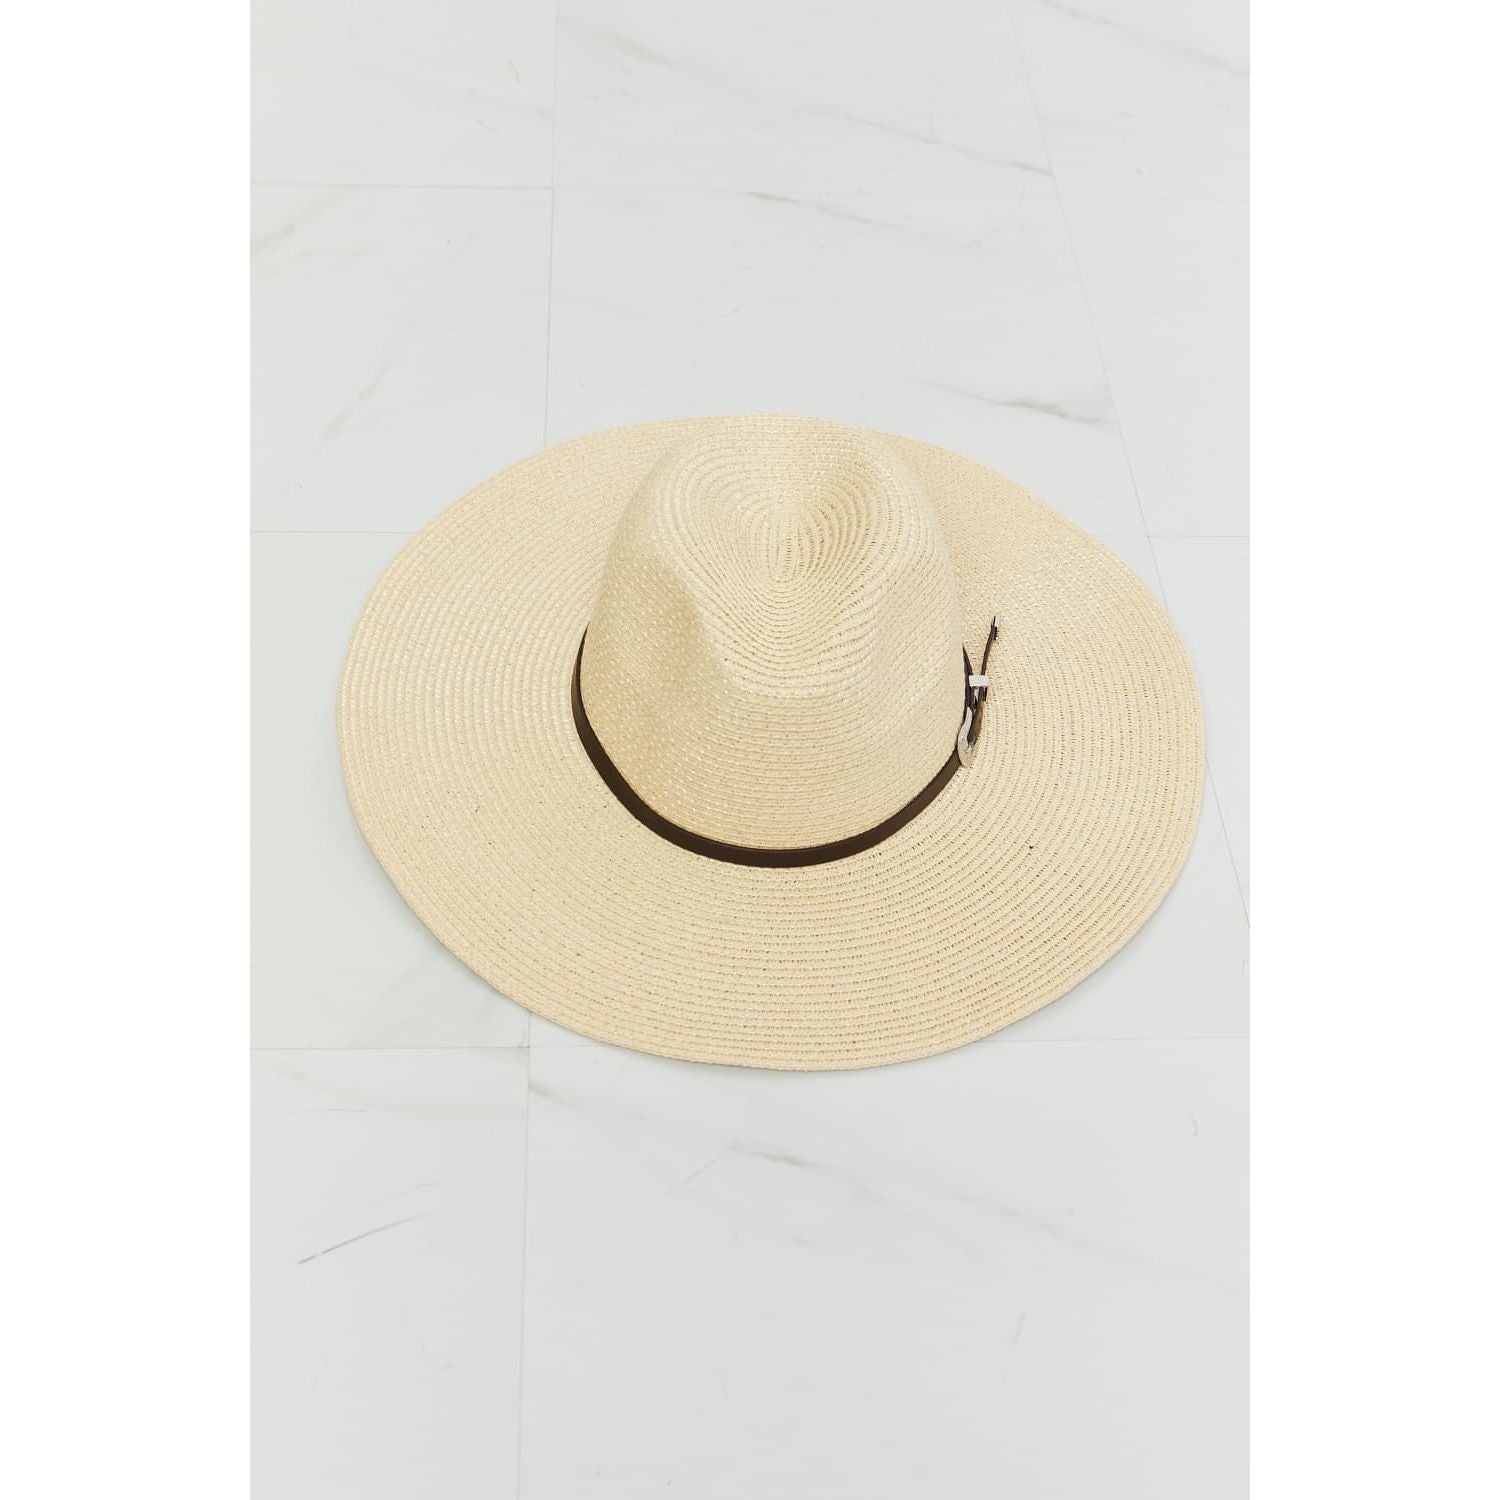 Fame Boho Summer Straw Fedora Hat - TiffanyzKlozet